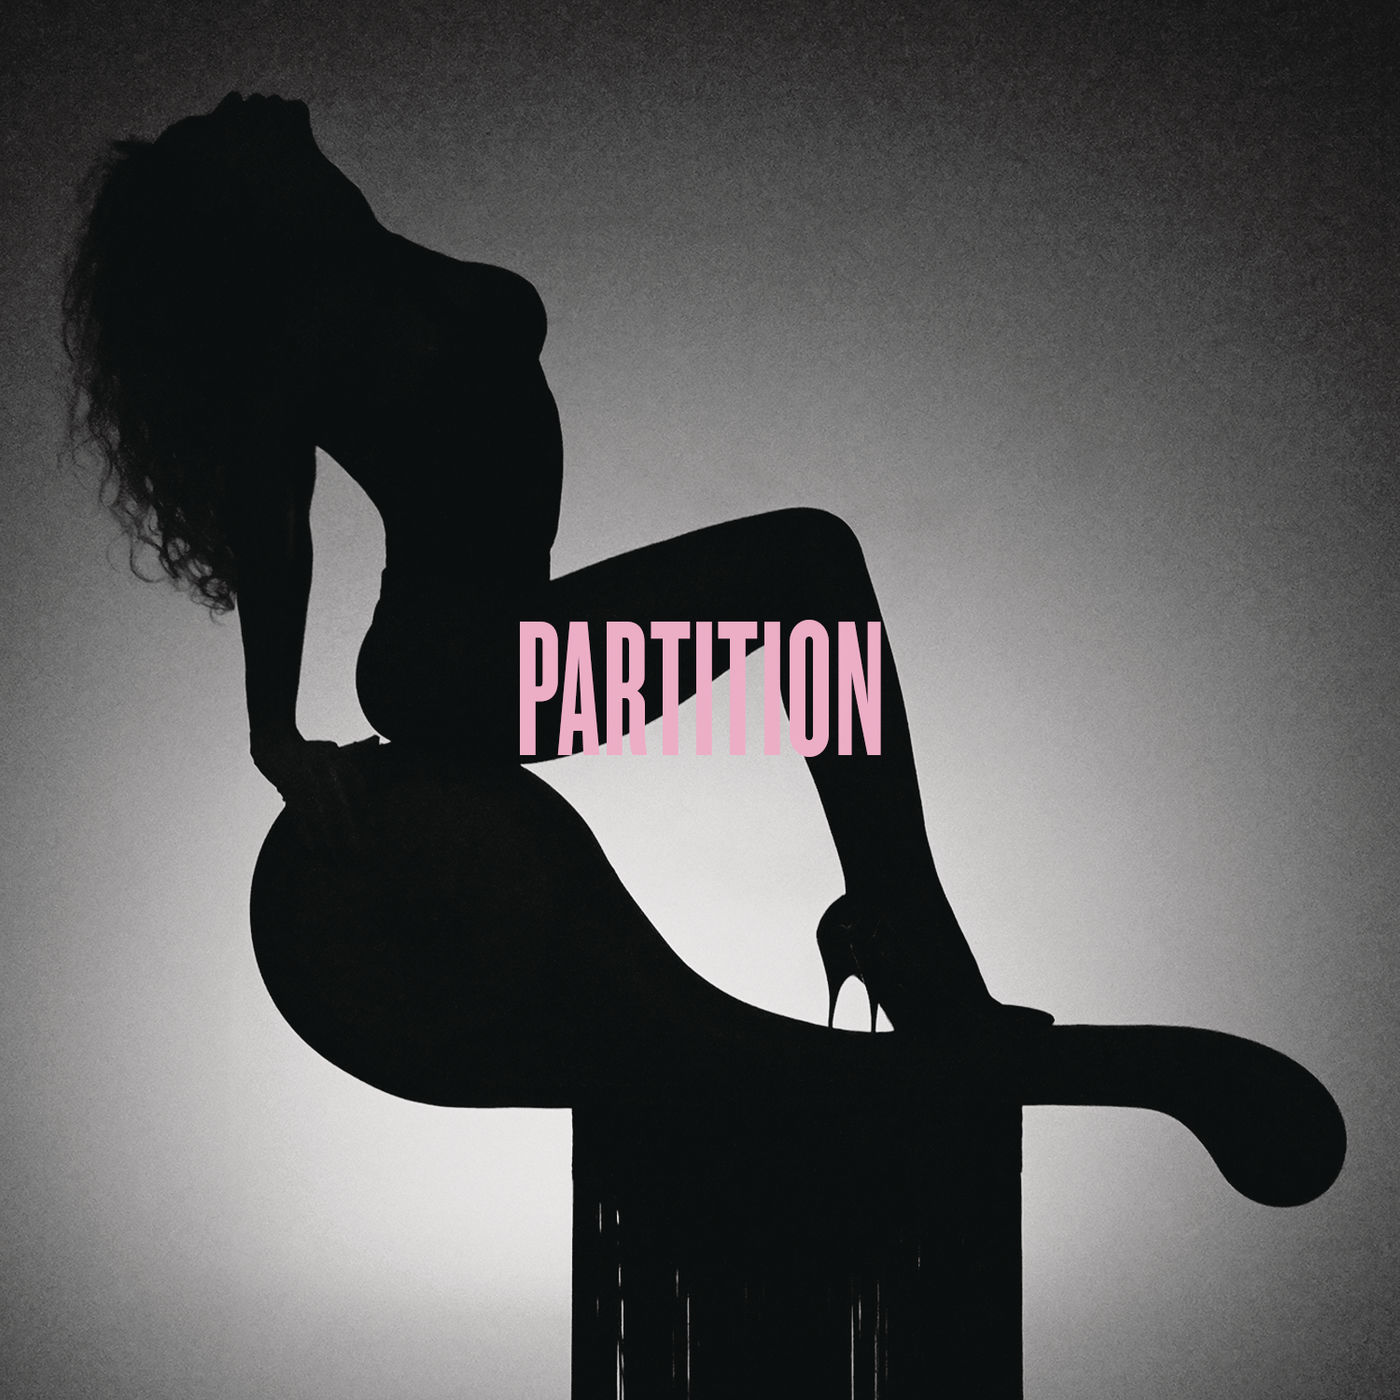 Beyoncé – Partition【44.1kHz／16bit】美国区-OppsUpro音乐帝国